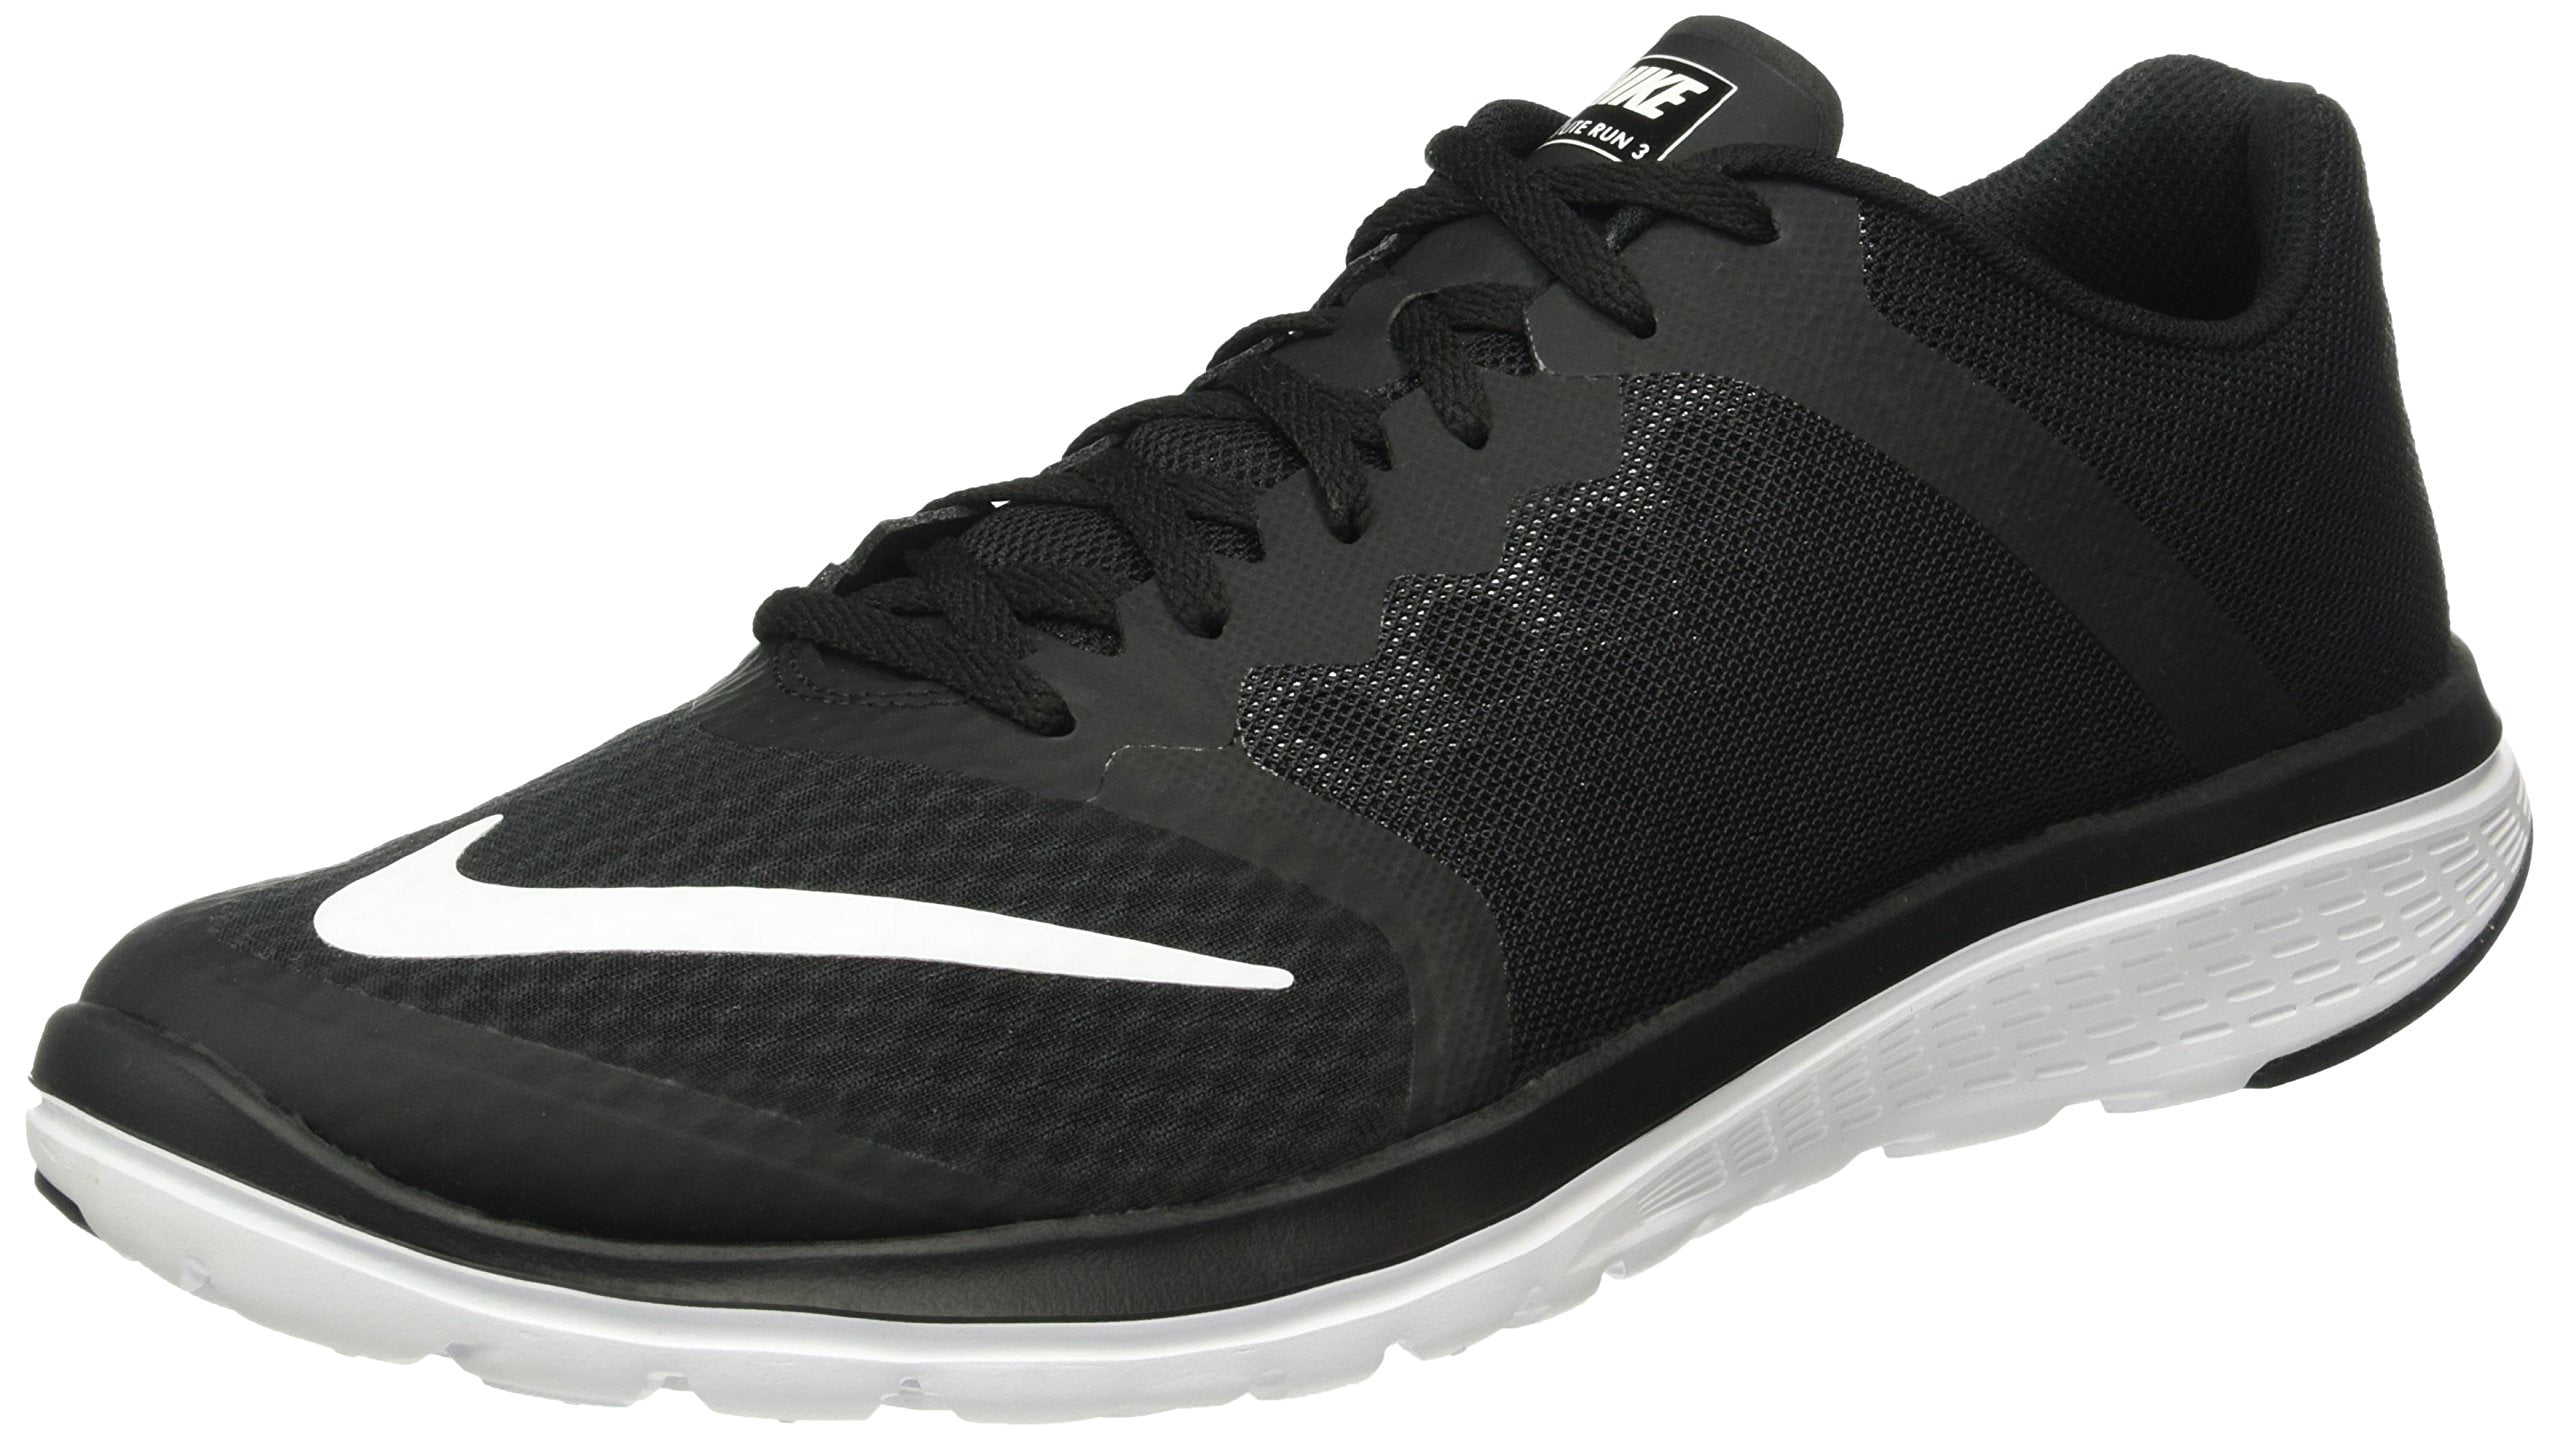 Recuerdo pronunciación Inapropiado Nike Mens FS Lite Run 3 Running Shoe Black/White (9.5 D(M) US) - Walmart.com